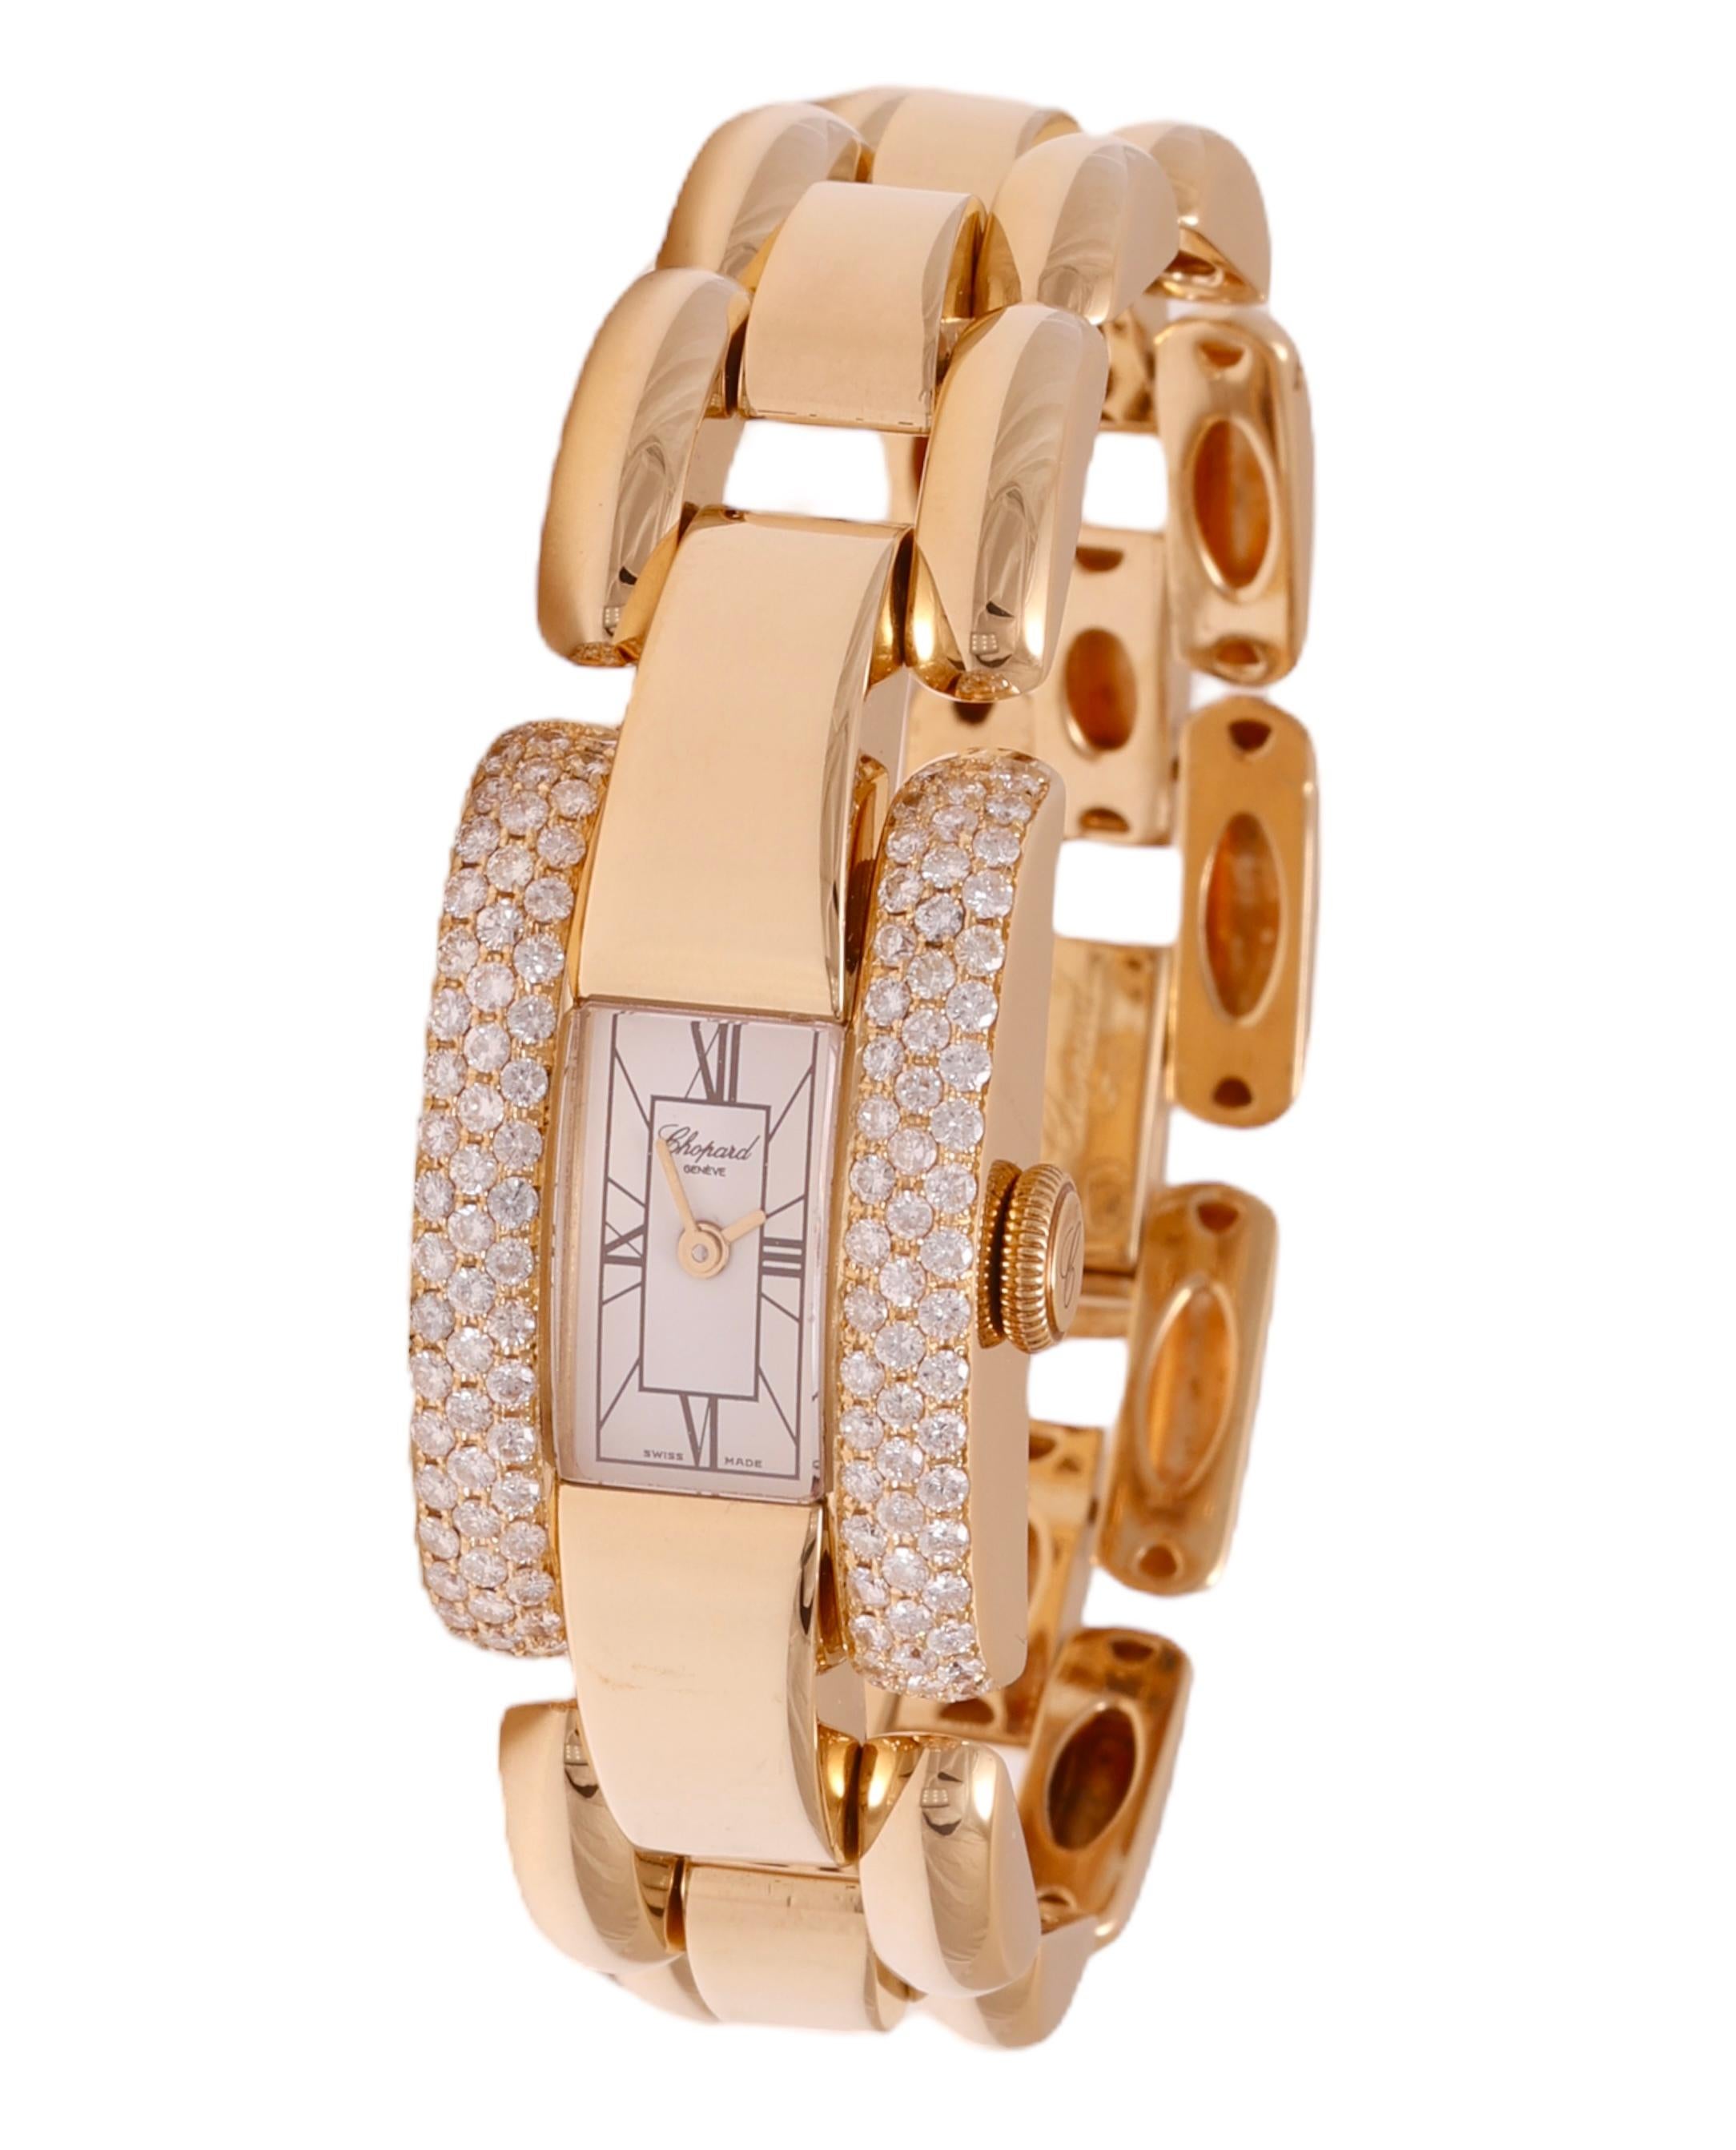 Artisan 18 Kt. Gold & Diamonds Chopard La Strada Wrist Watch For Sale